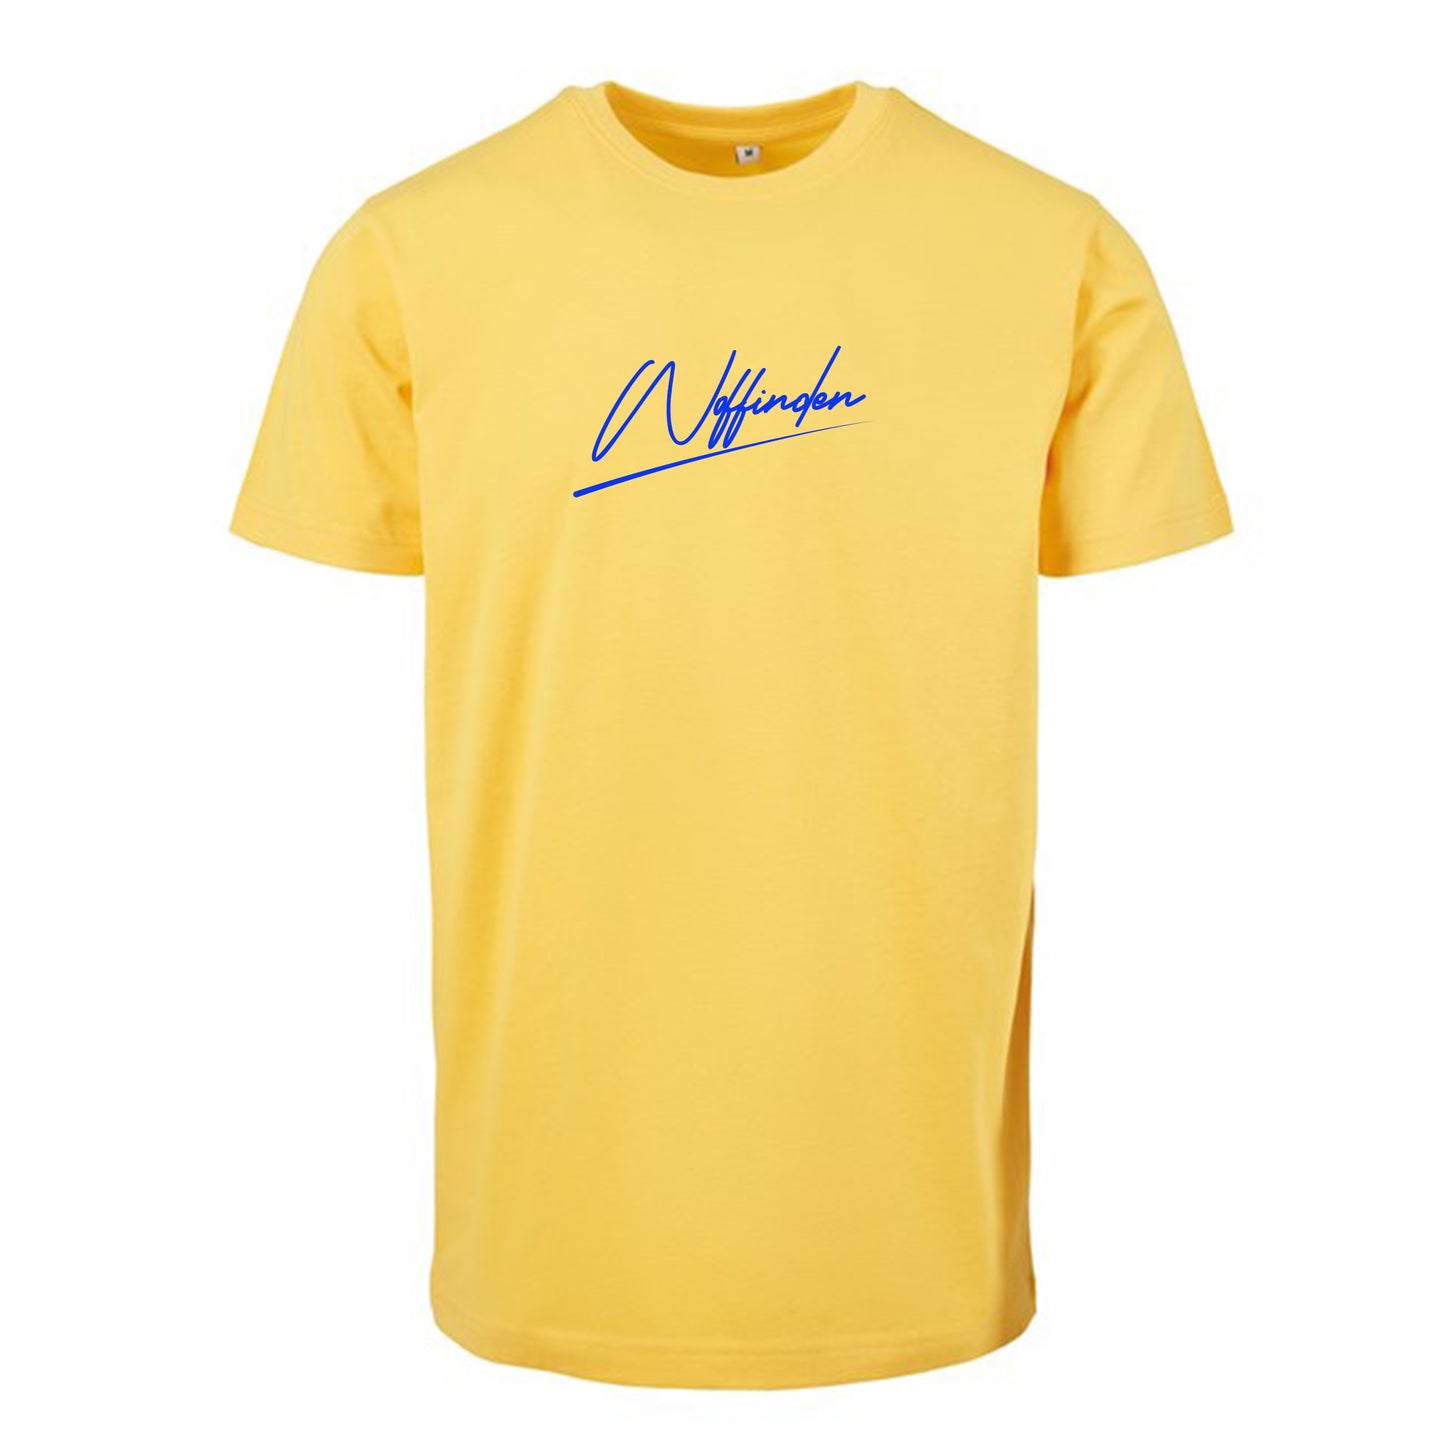 Woffinden signature T-shirt (Yellow & Blue)